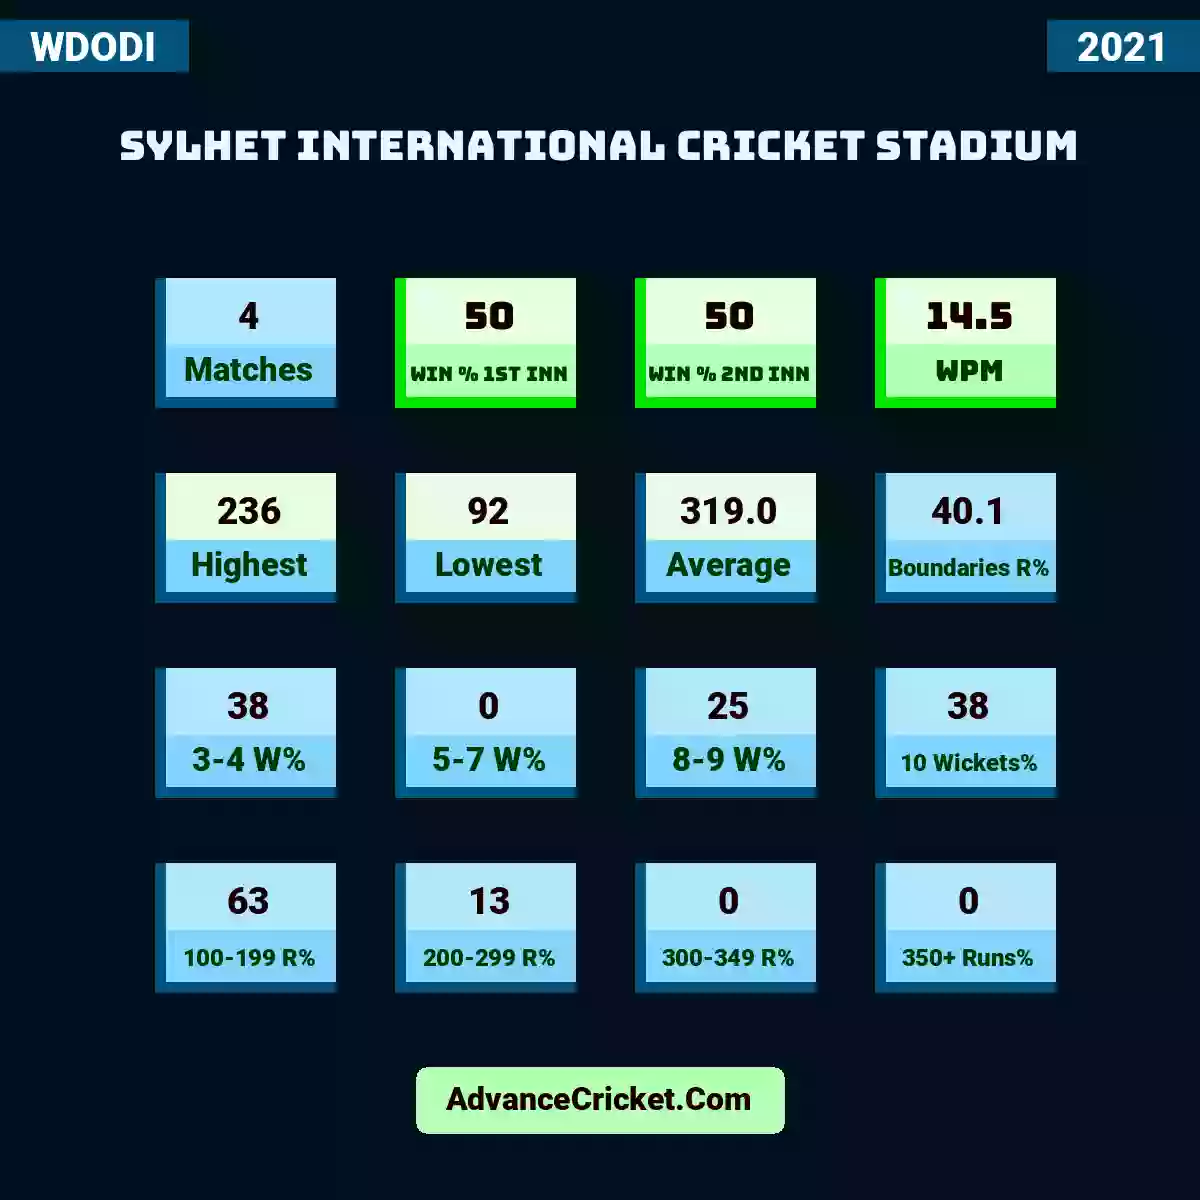 Image showing Sylhet International Cricket Stadium with Matches: 4, Win % 1st Inn: 50, Win % 2nd Inn: 50, WPM: 14.5, Highest: 236, Lowest: 92, Average: 319.0, Boundaries R%: 40.1, 3-4 W%: 38, 5-7 W%: 0, 8-9 W%: 25, 10 Wickets%: 38, 100-199 R%: 63, 200-299 R%: 13, 300-349 R%: 0, 350+ Runs%: 0.